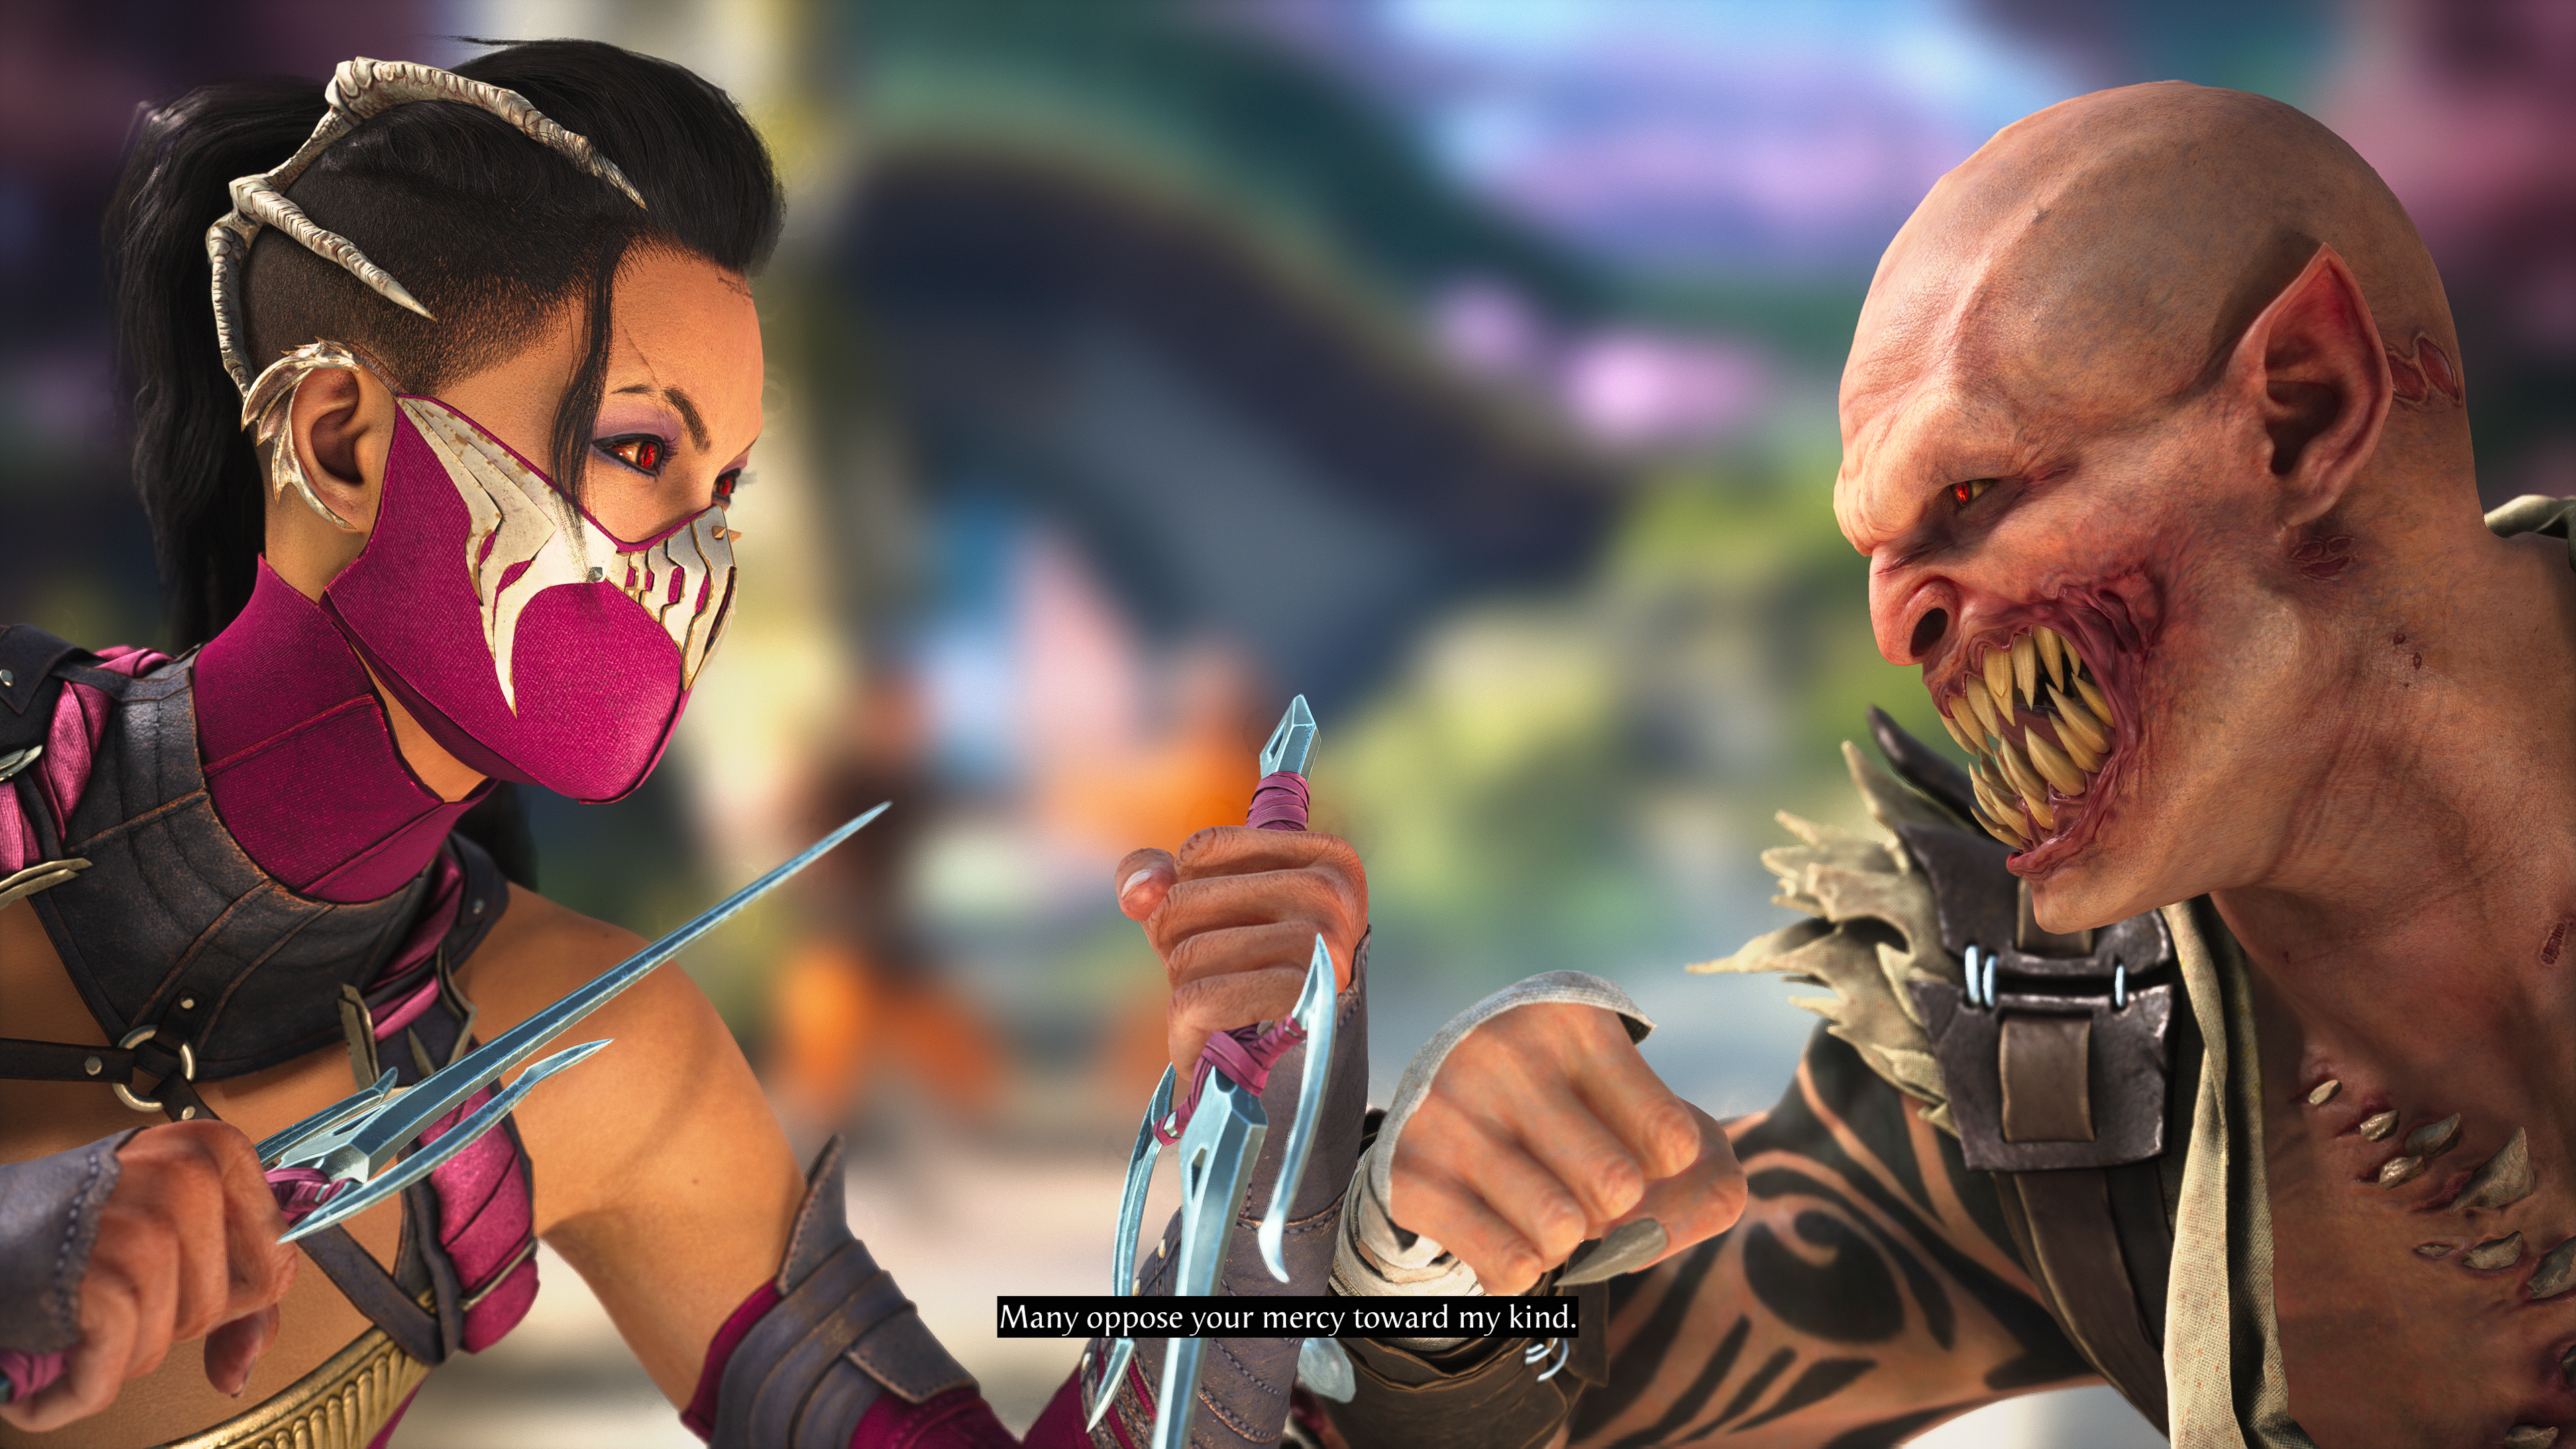 Why Mortal Kombat Changes Kano's Bionic Eye Origin